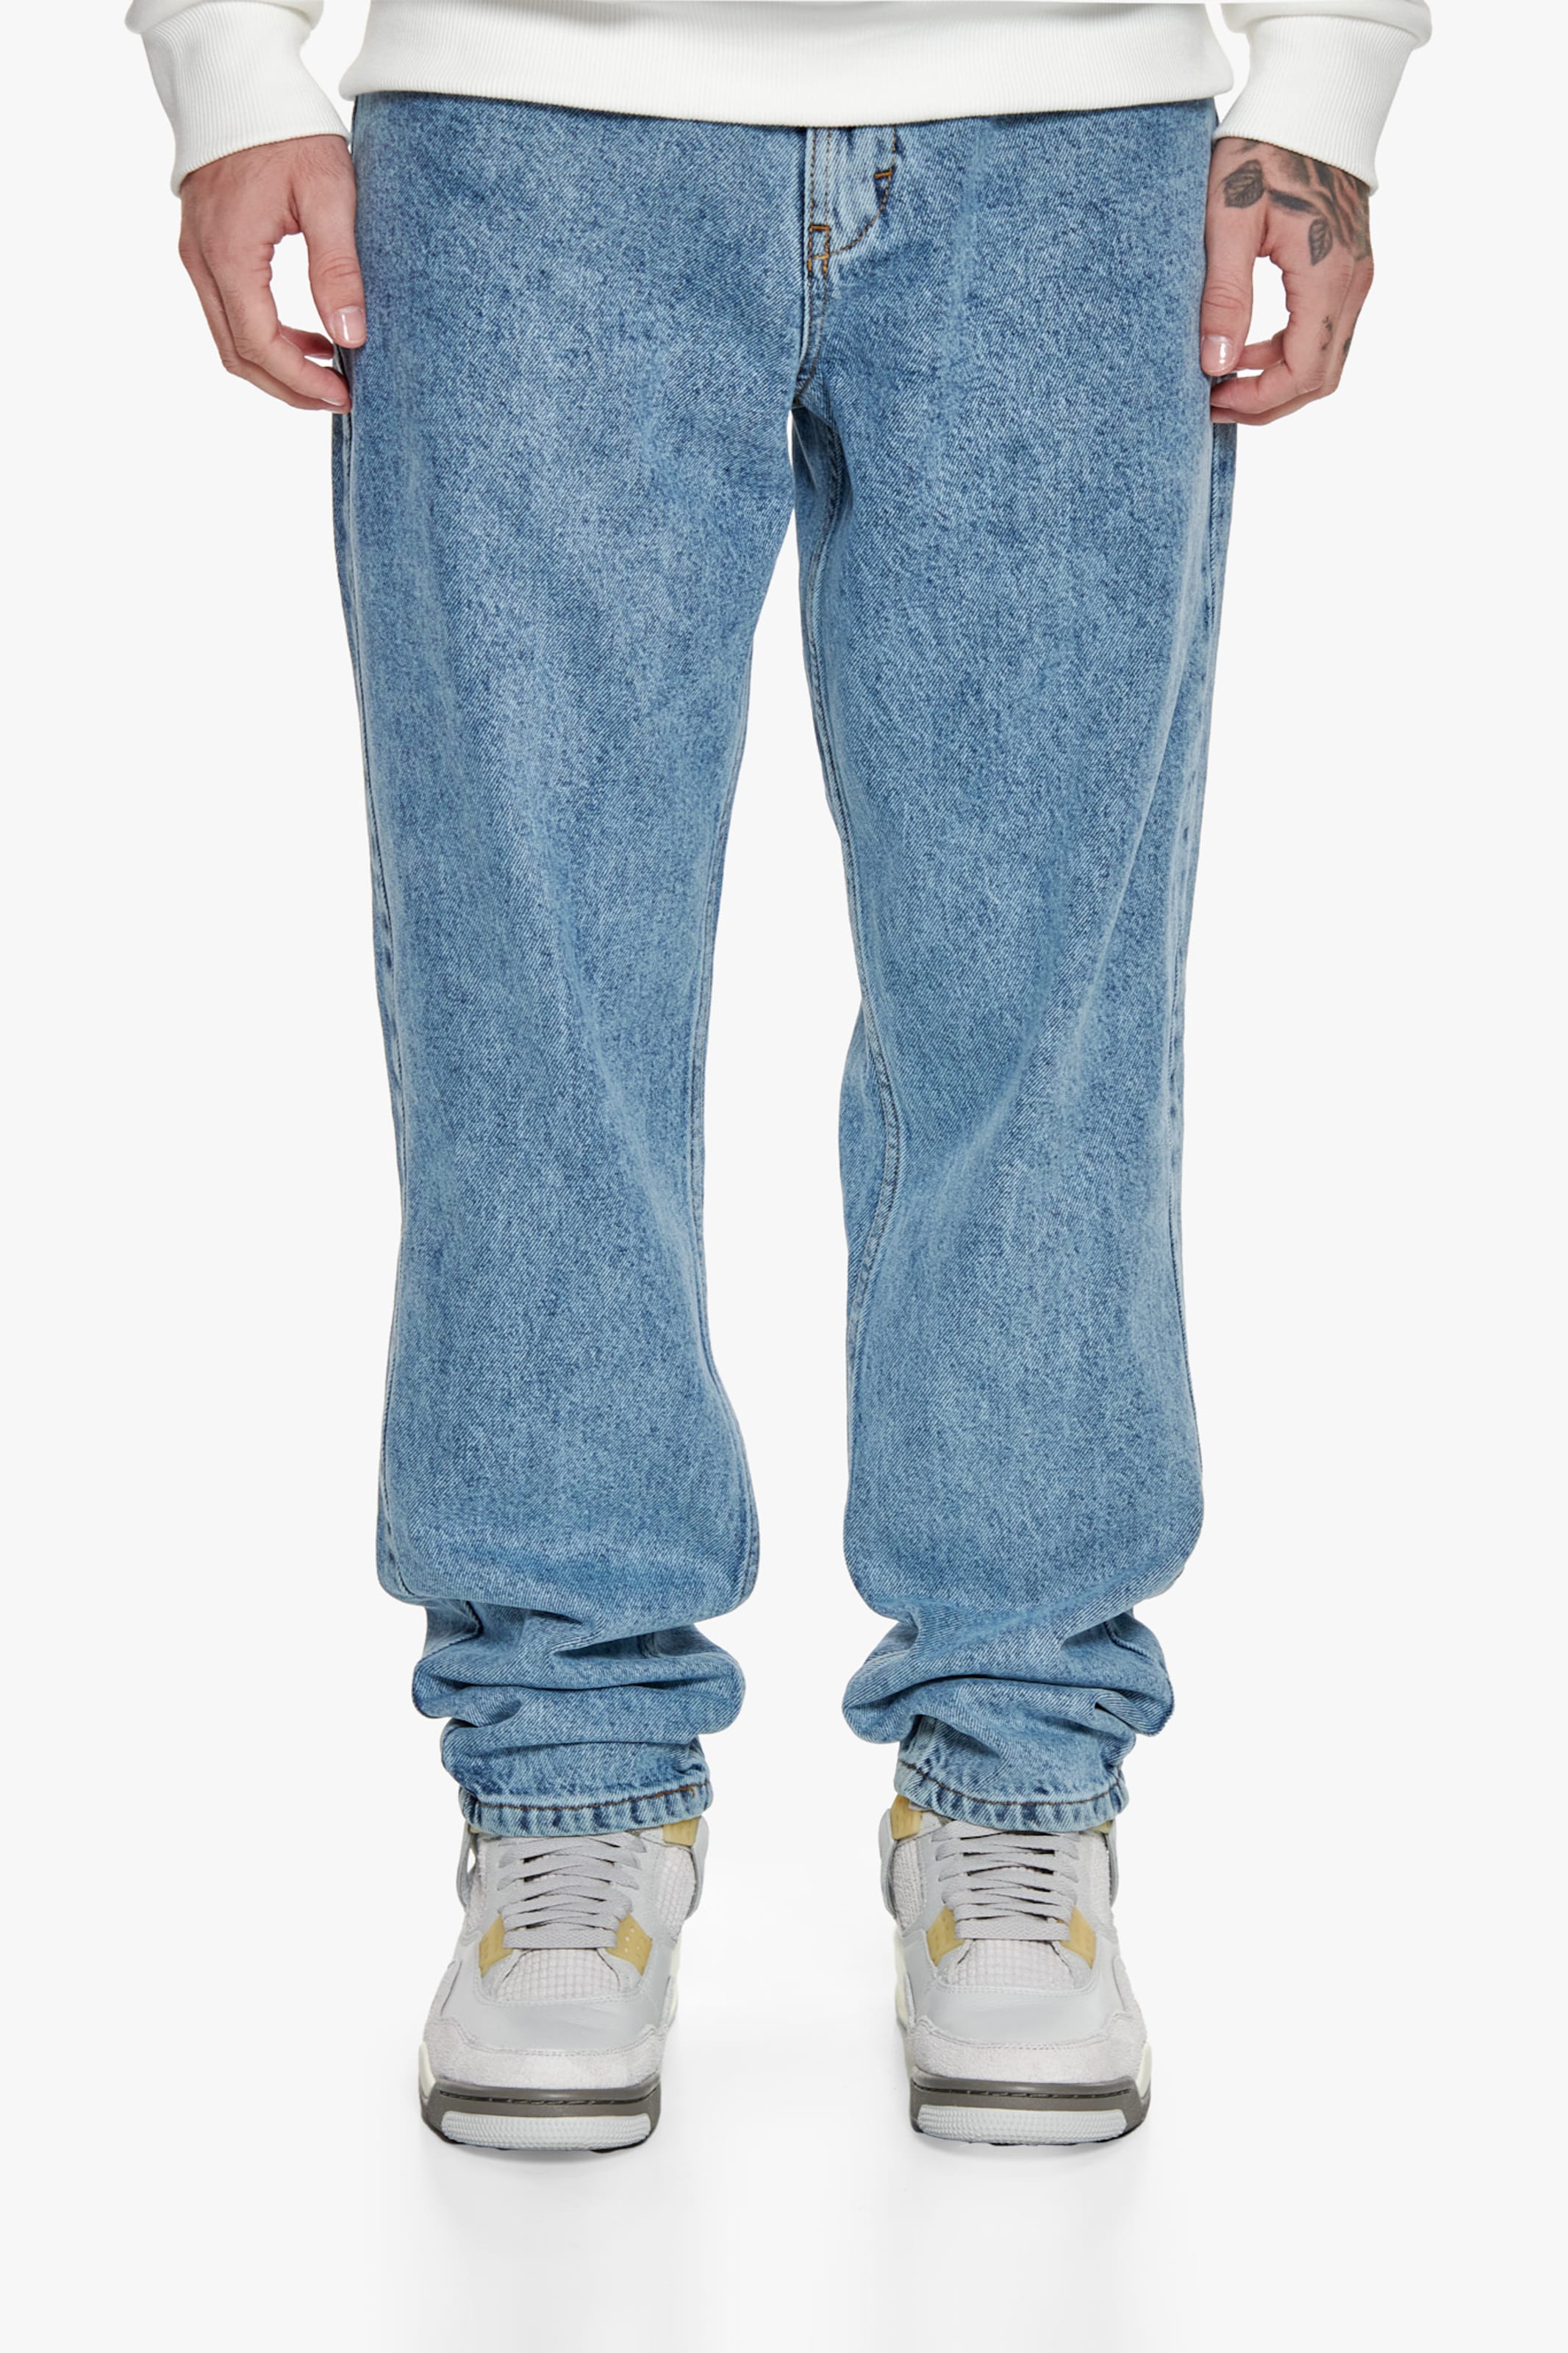 Dropsize Loose Fit Jeans Mannen op kleur blauw, Maat M